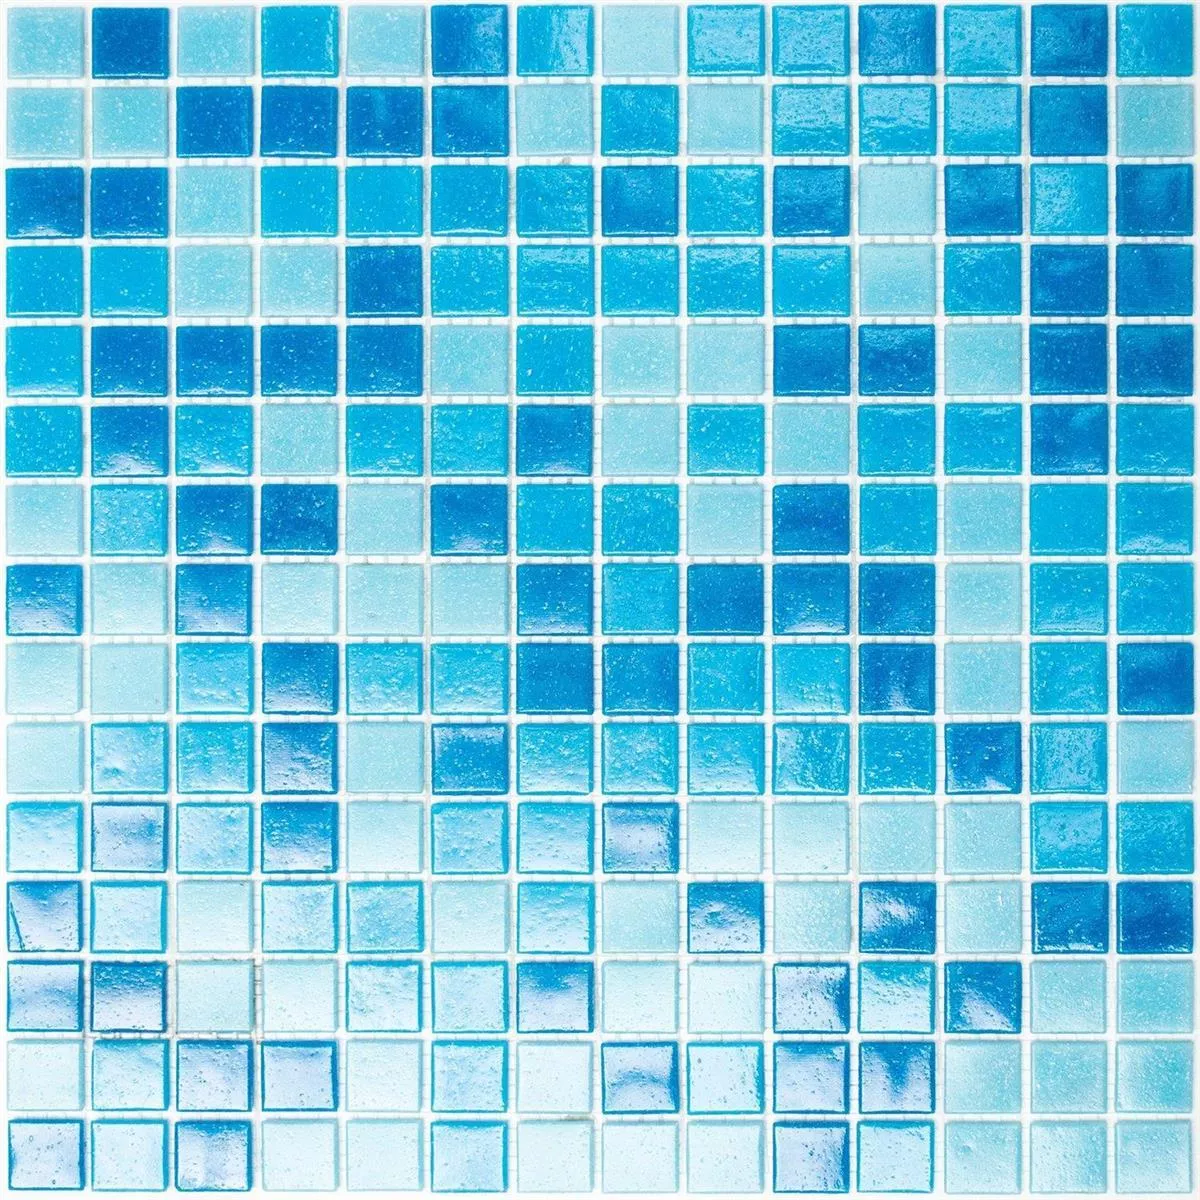 Sample Swimming Pool Mosaic Pazifik Pasted on Paper